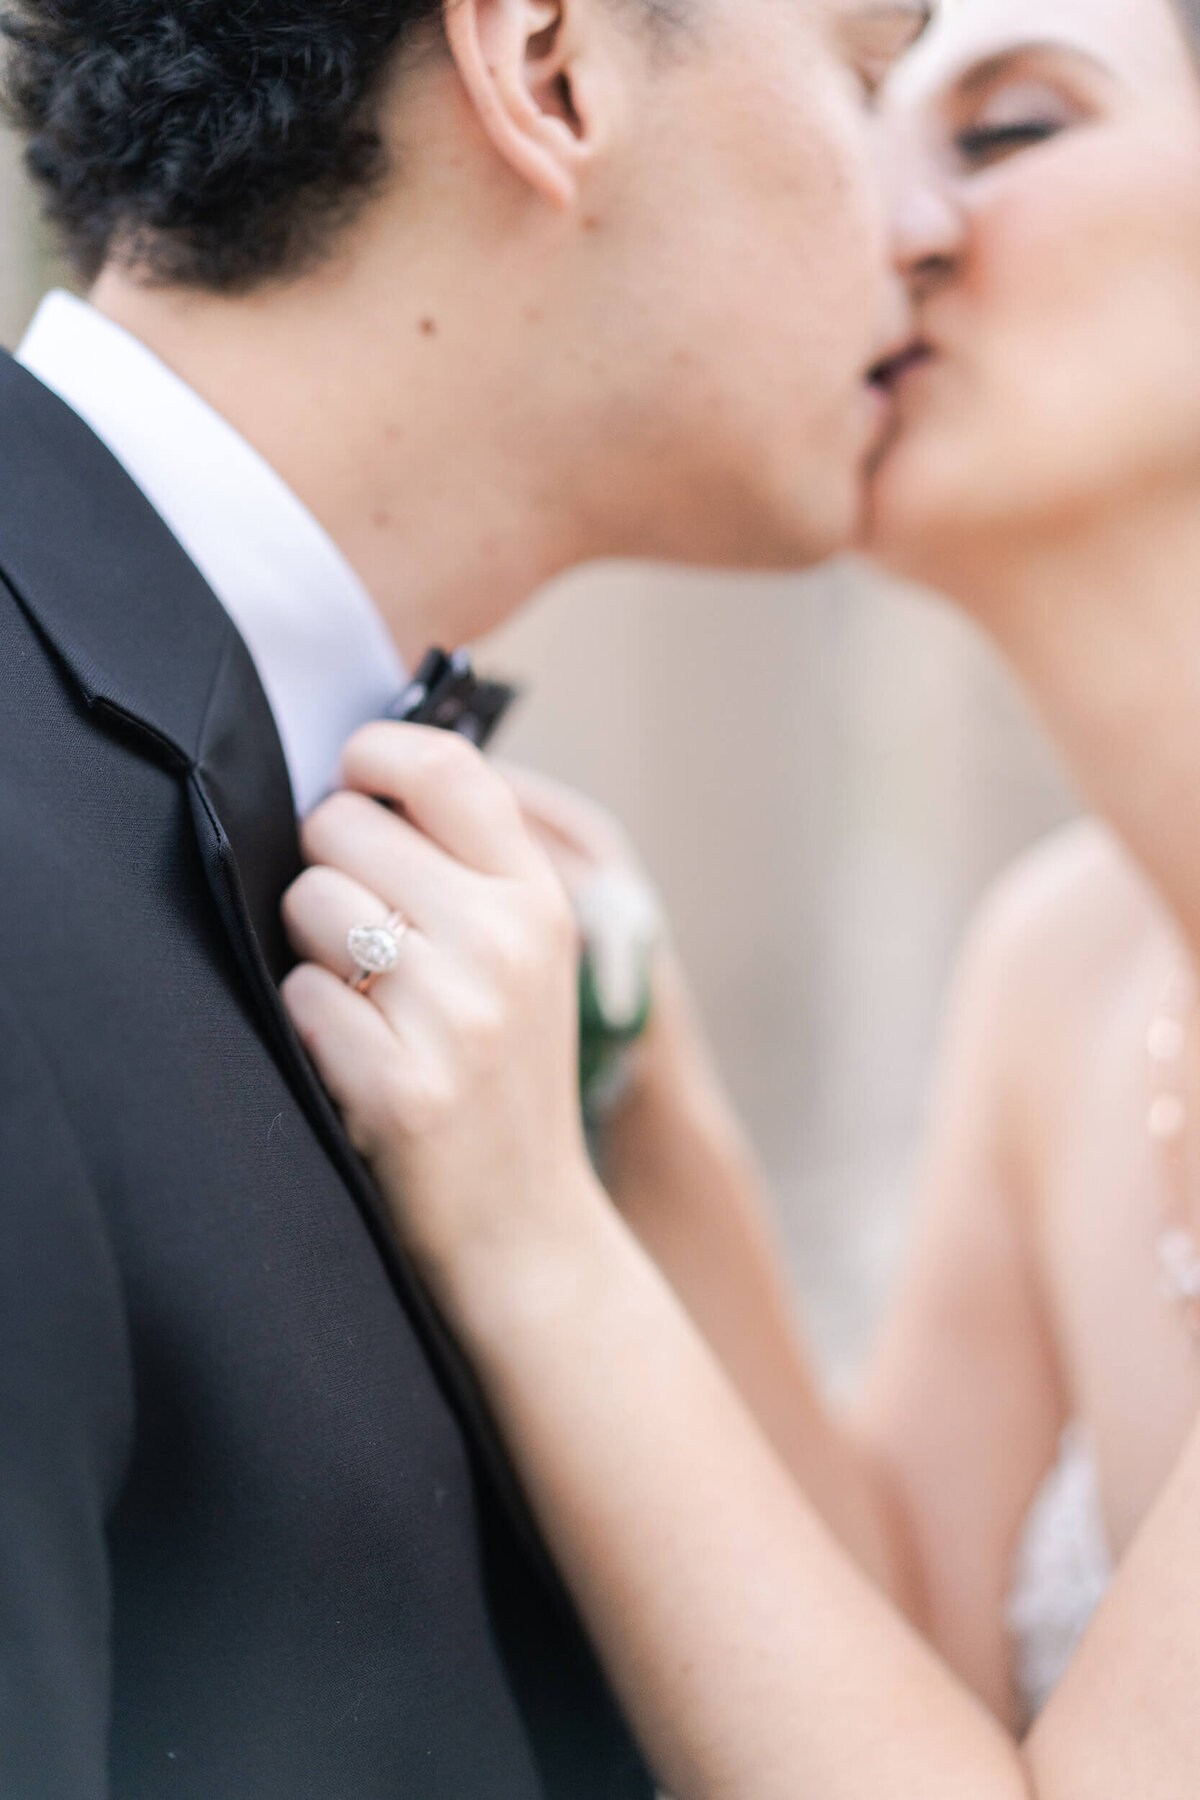 Houston's best wedding photographer Swish & Click Photography captures a wedding kiss at Hotel Zaza